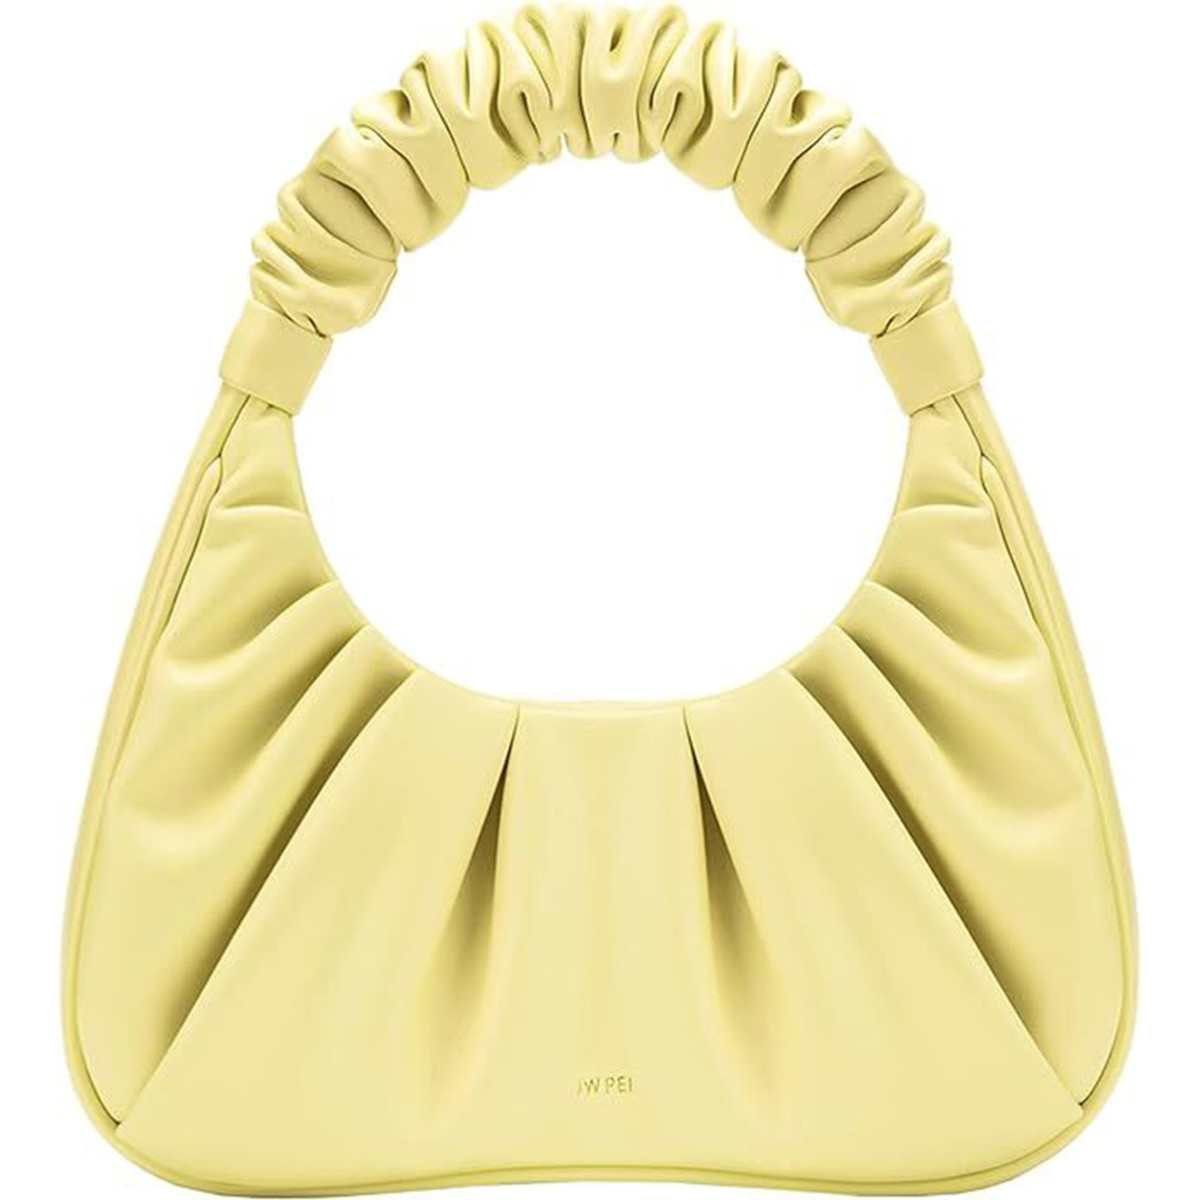 Gigi Hadid's JW Pei Bag on Sale for Amazon Black Friday 2023